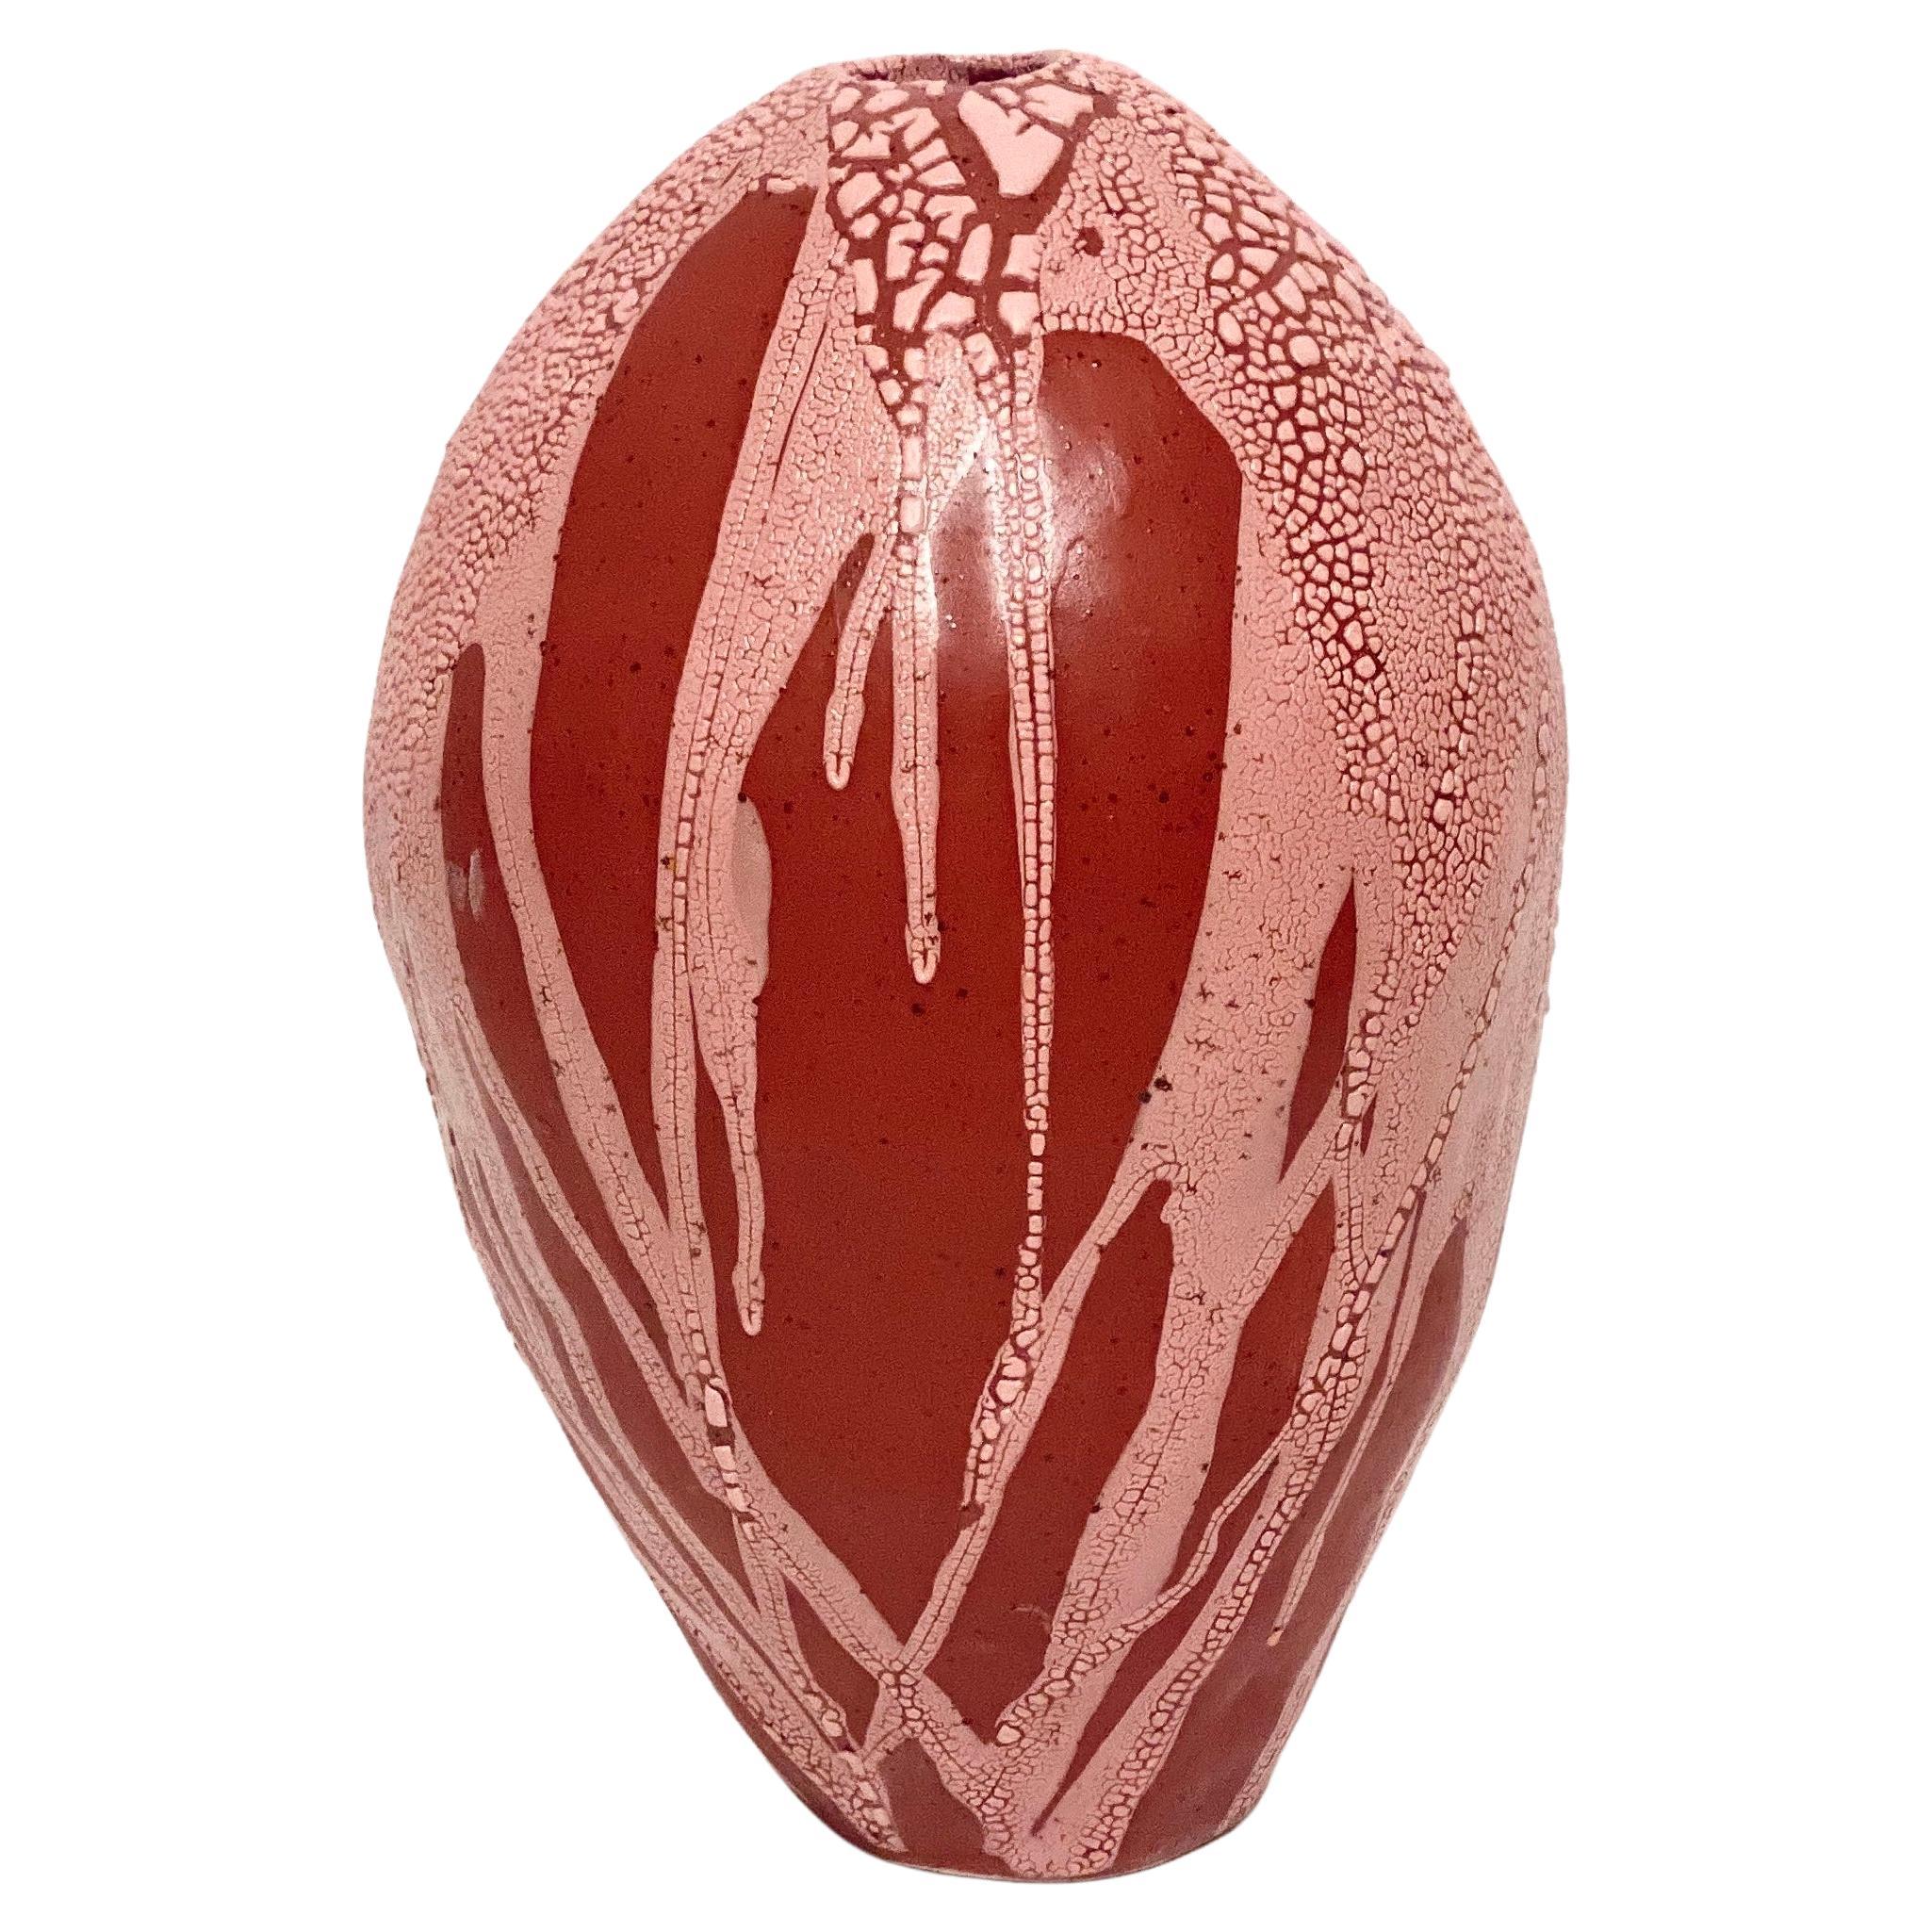 Red/Pink Dragon Egg Vase by Astrid Öhman For Sale